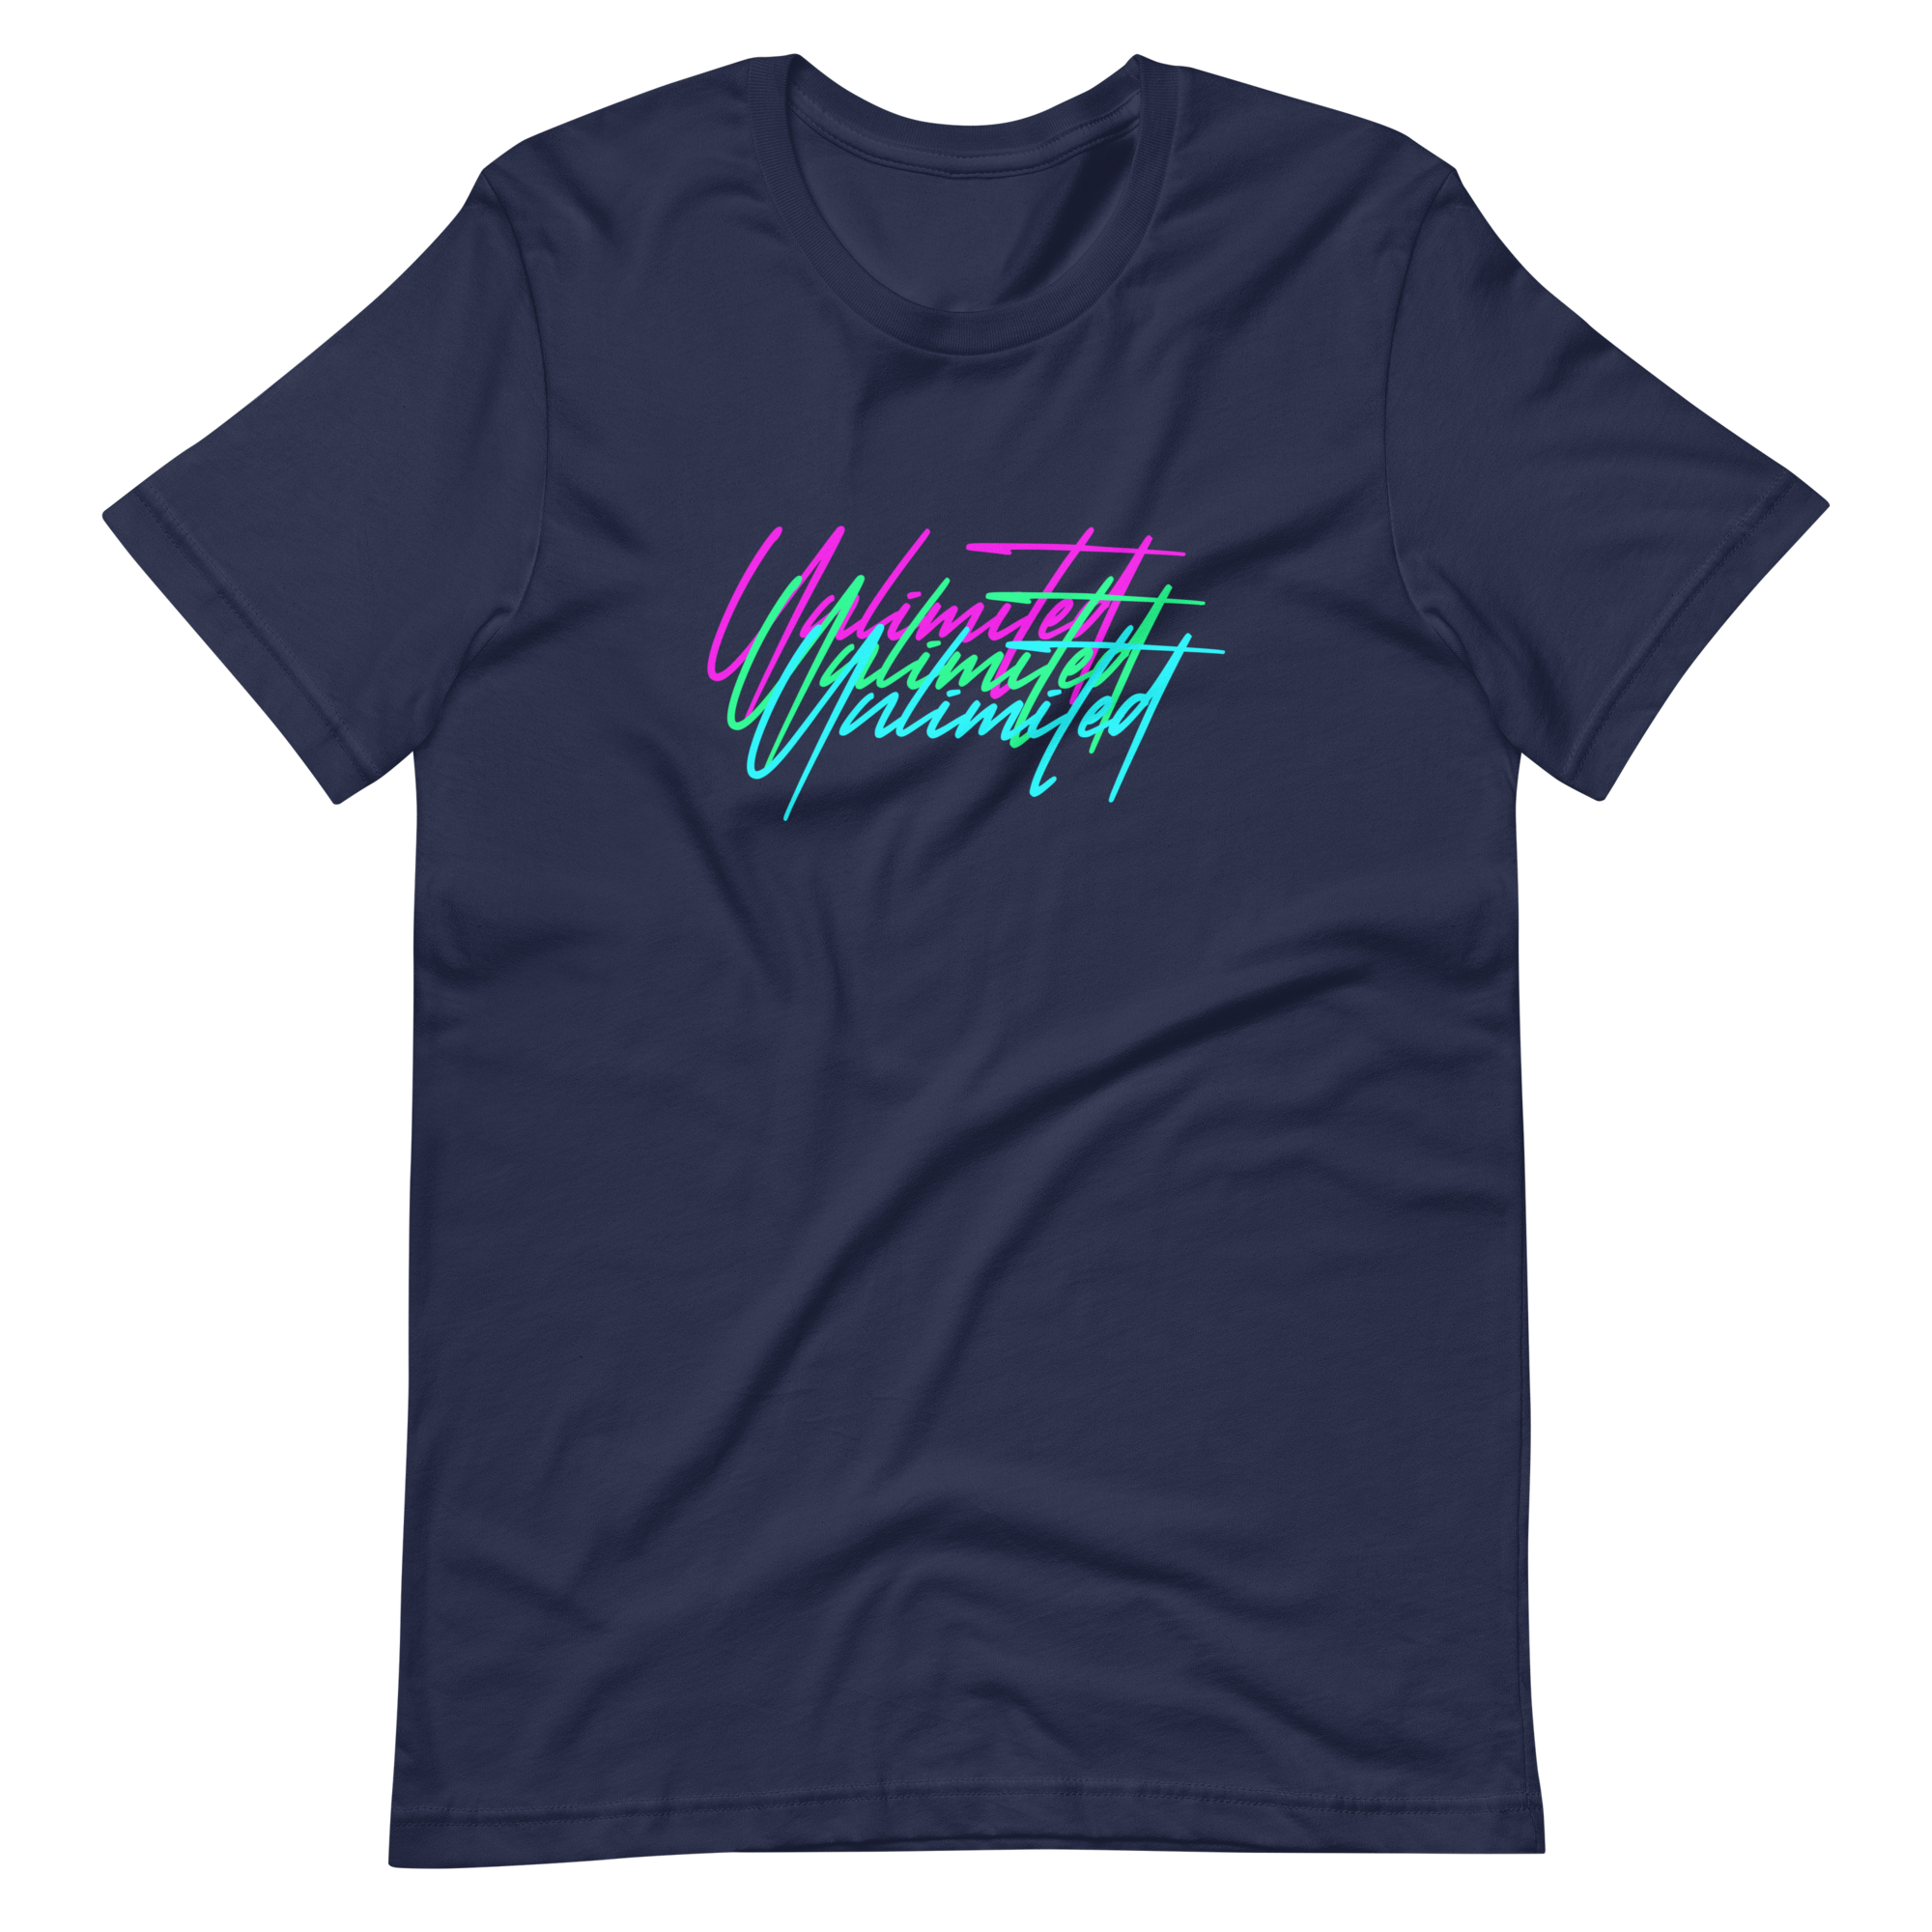 Unlimited "Label" T-Shirt